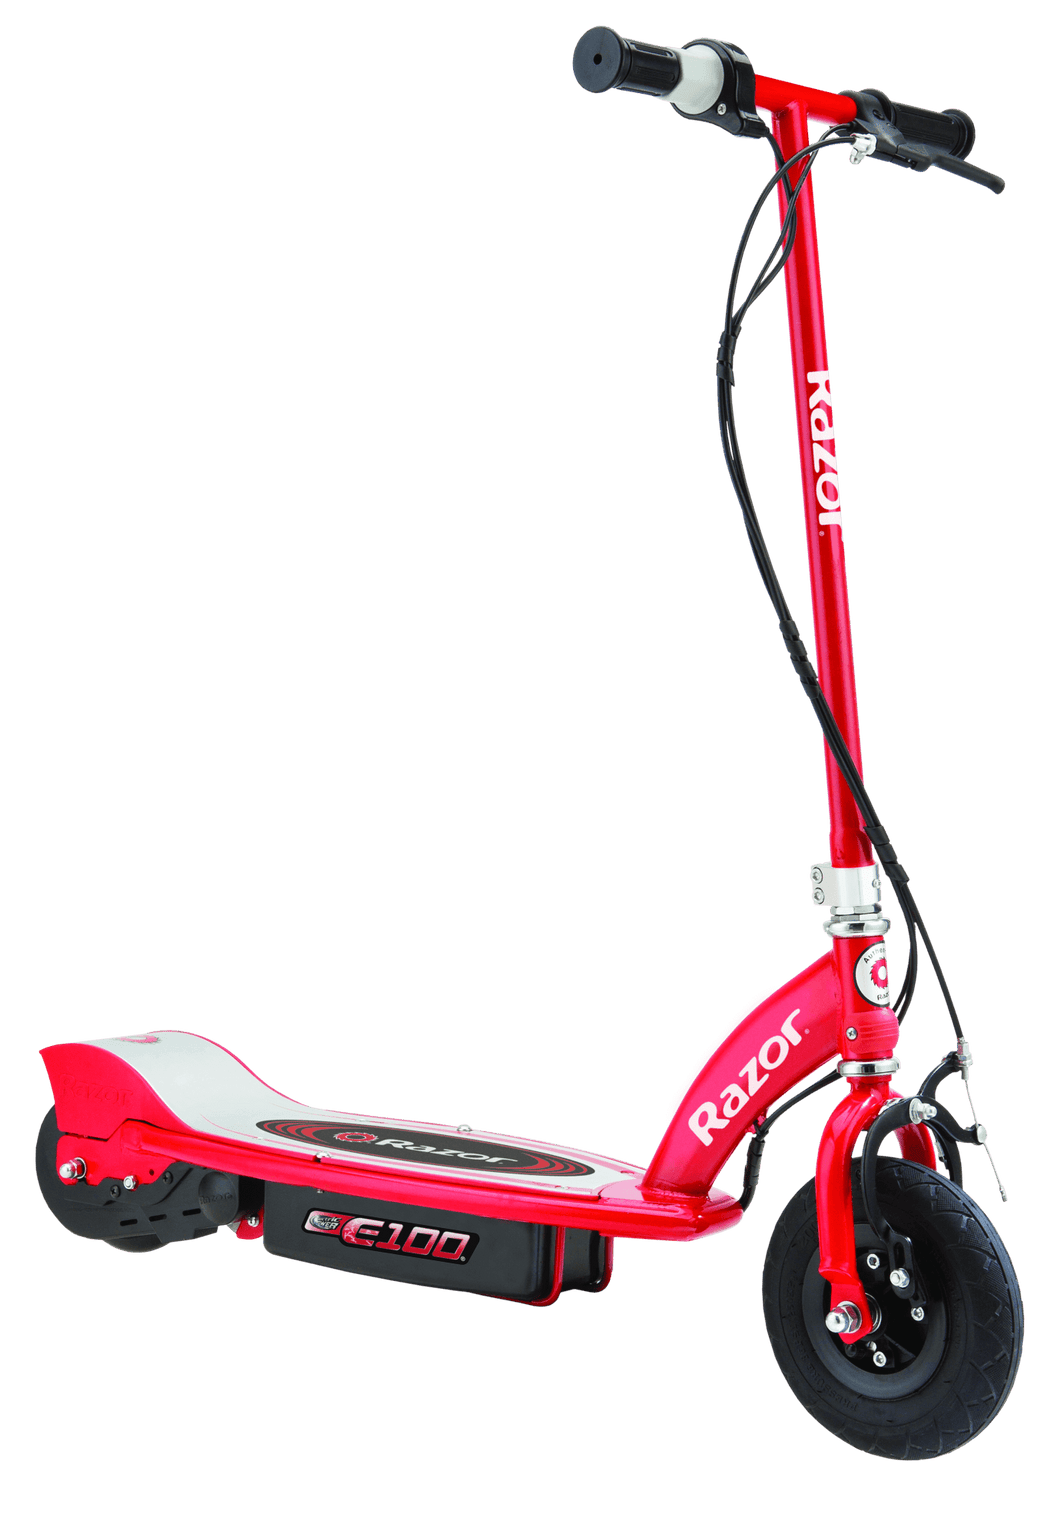 Razor E100 Electric Scooter - Red